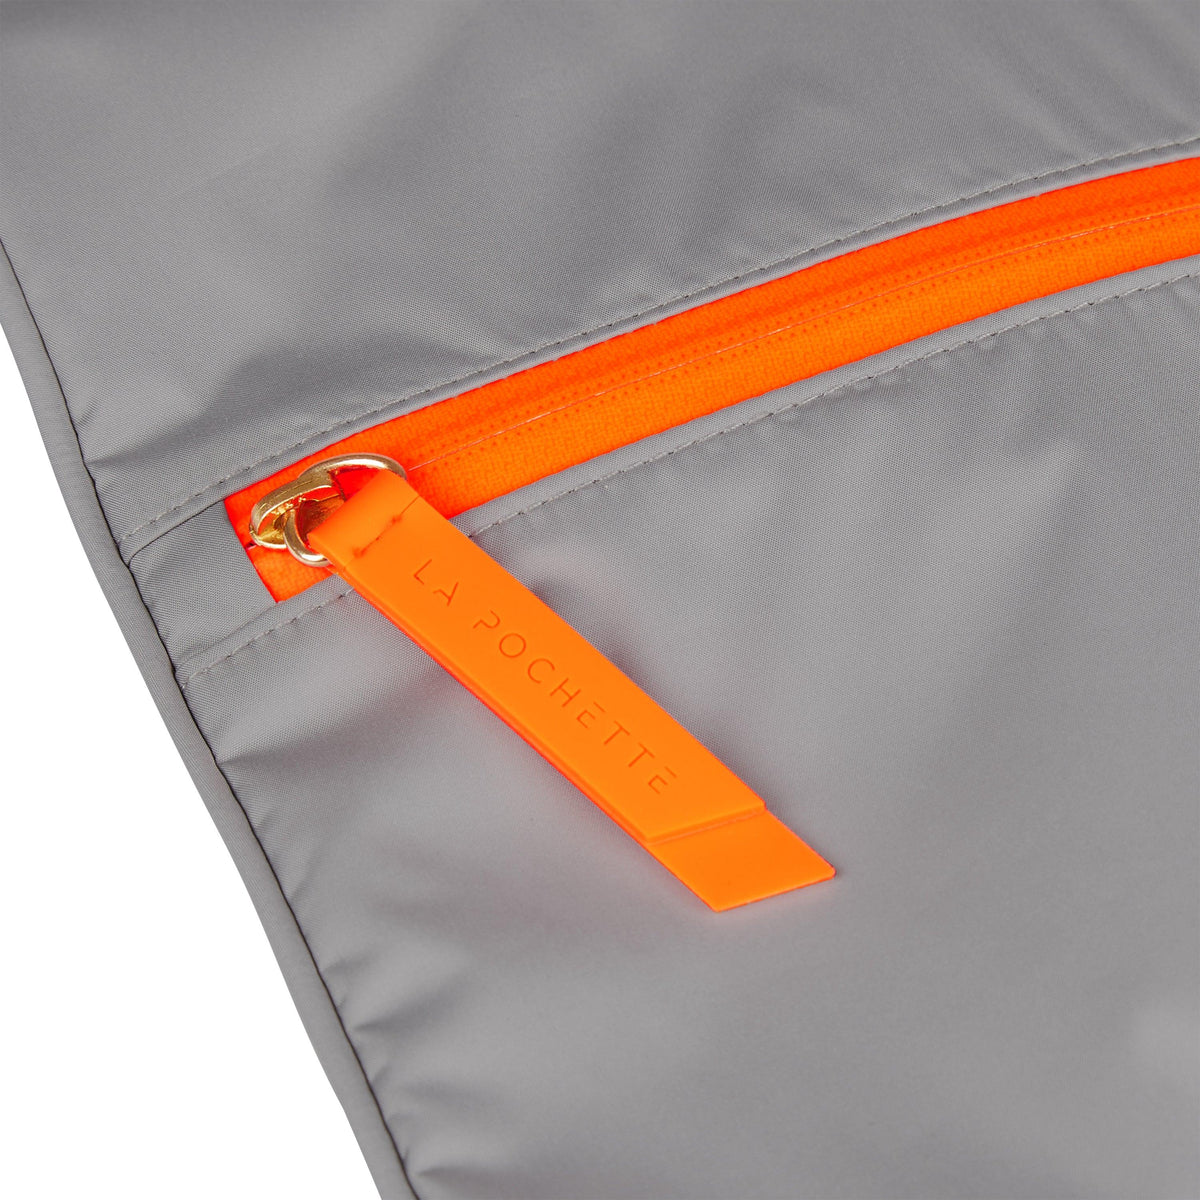 Rear view of Maxi Wet Bag in Shadow Neon Orange colourway showing back zip detail